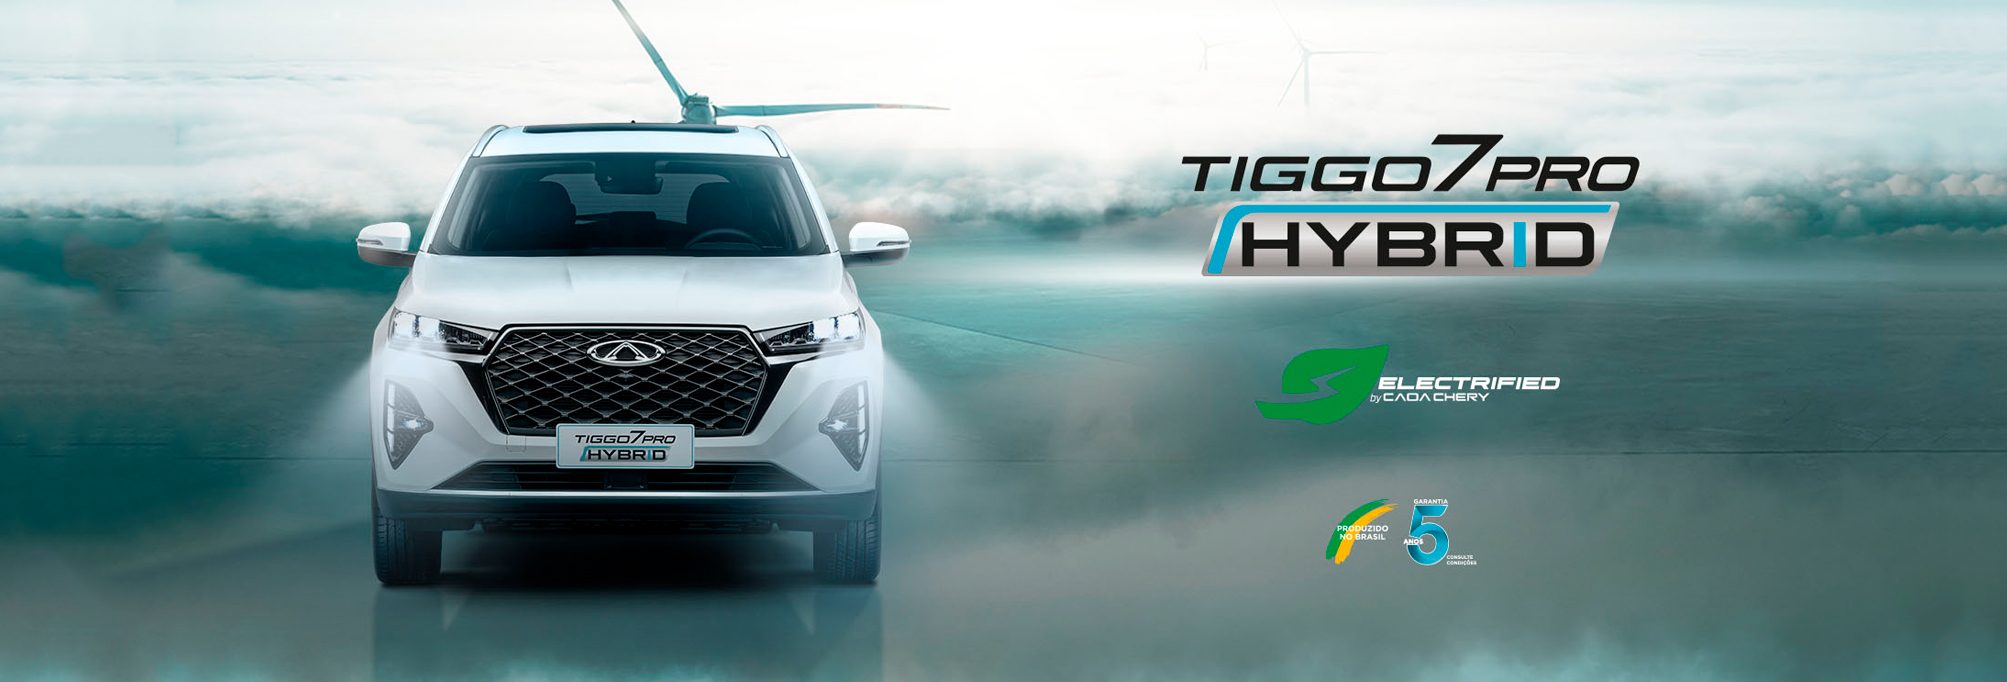 Tiggo 7 Hybrid